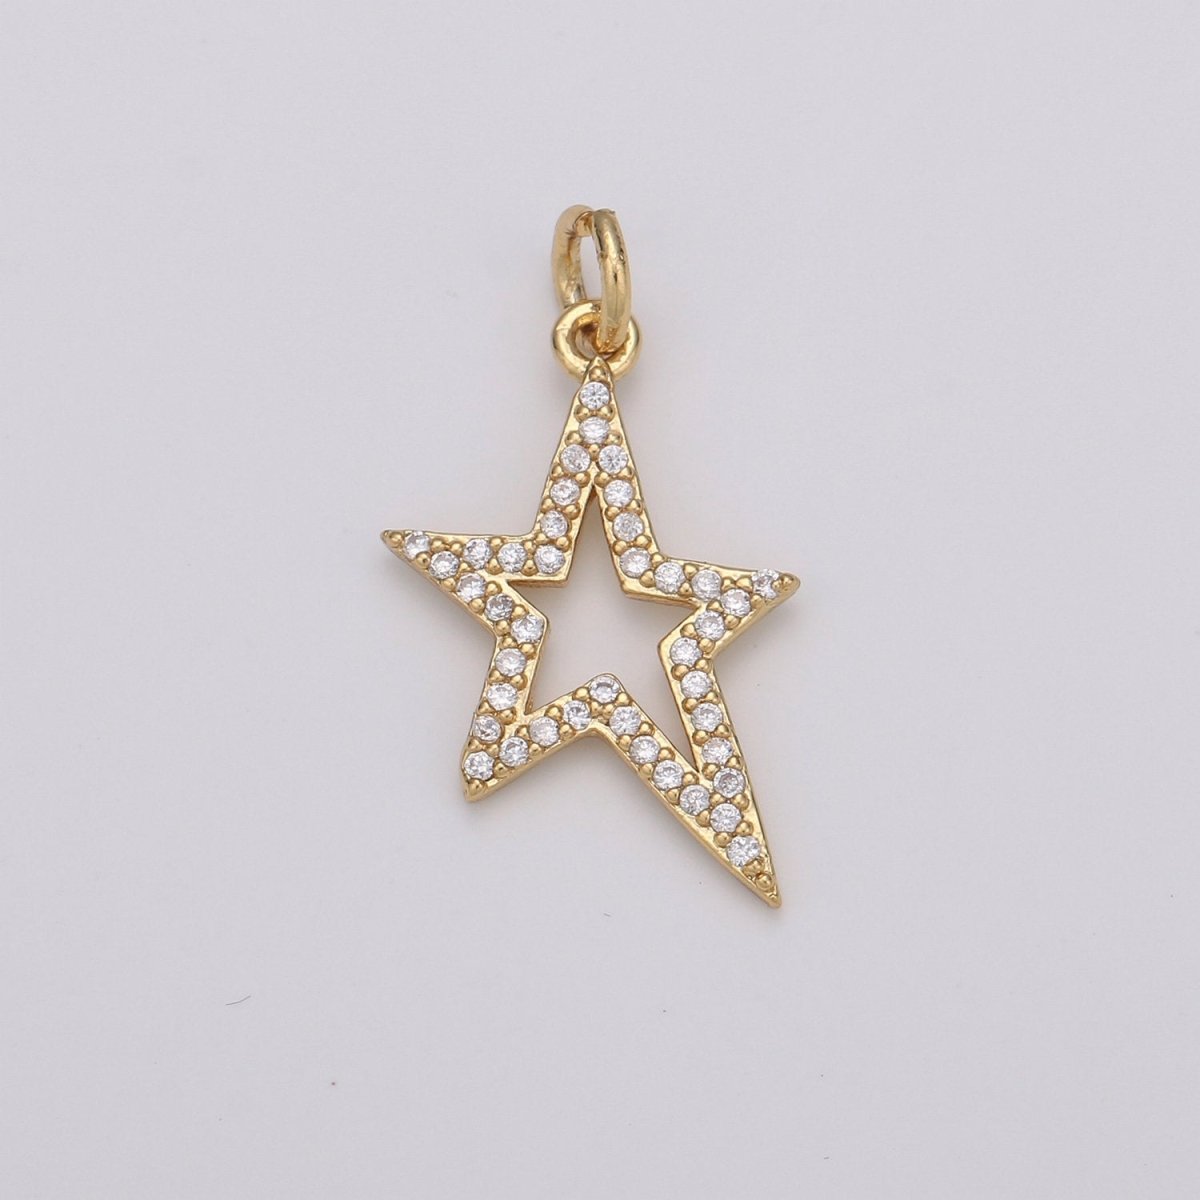 Gold Star pendant w/ Cubic, Nickel free 14k gold plated brass, Cubic zirconia, Cubic charm, Cubic star pendant Rockstar Charm D-197 - DLUXCA